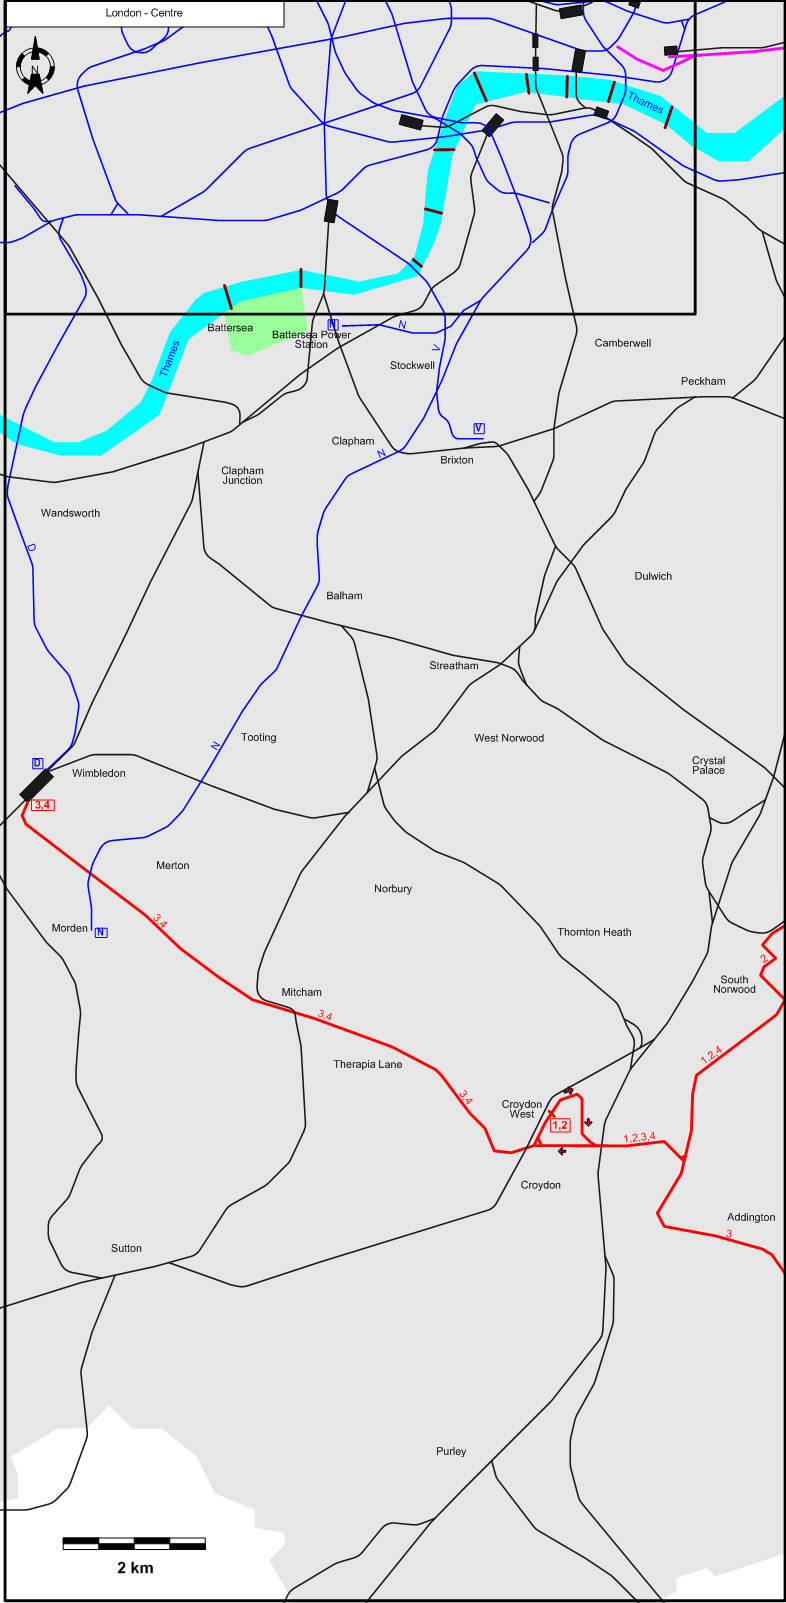 South London 2021 tram map